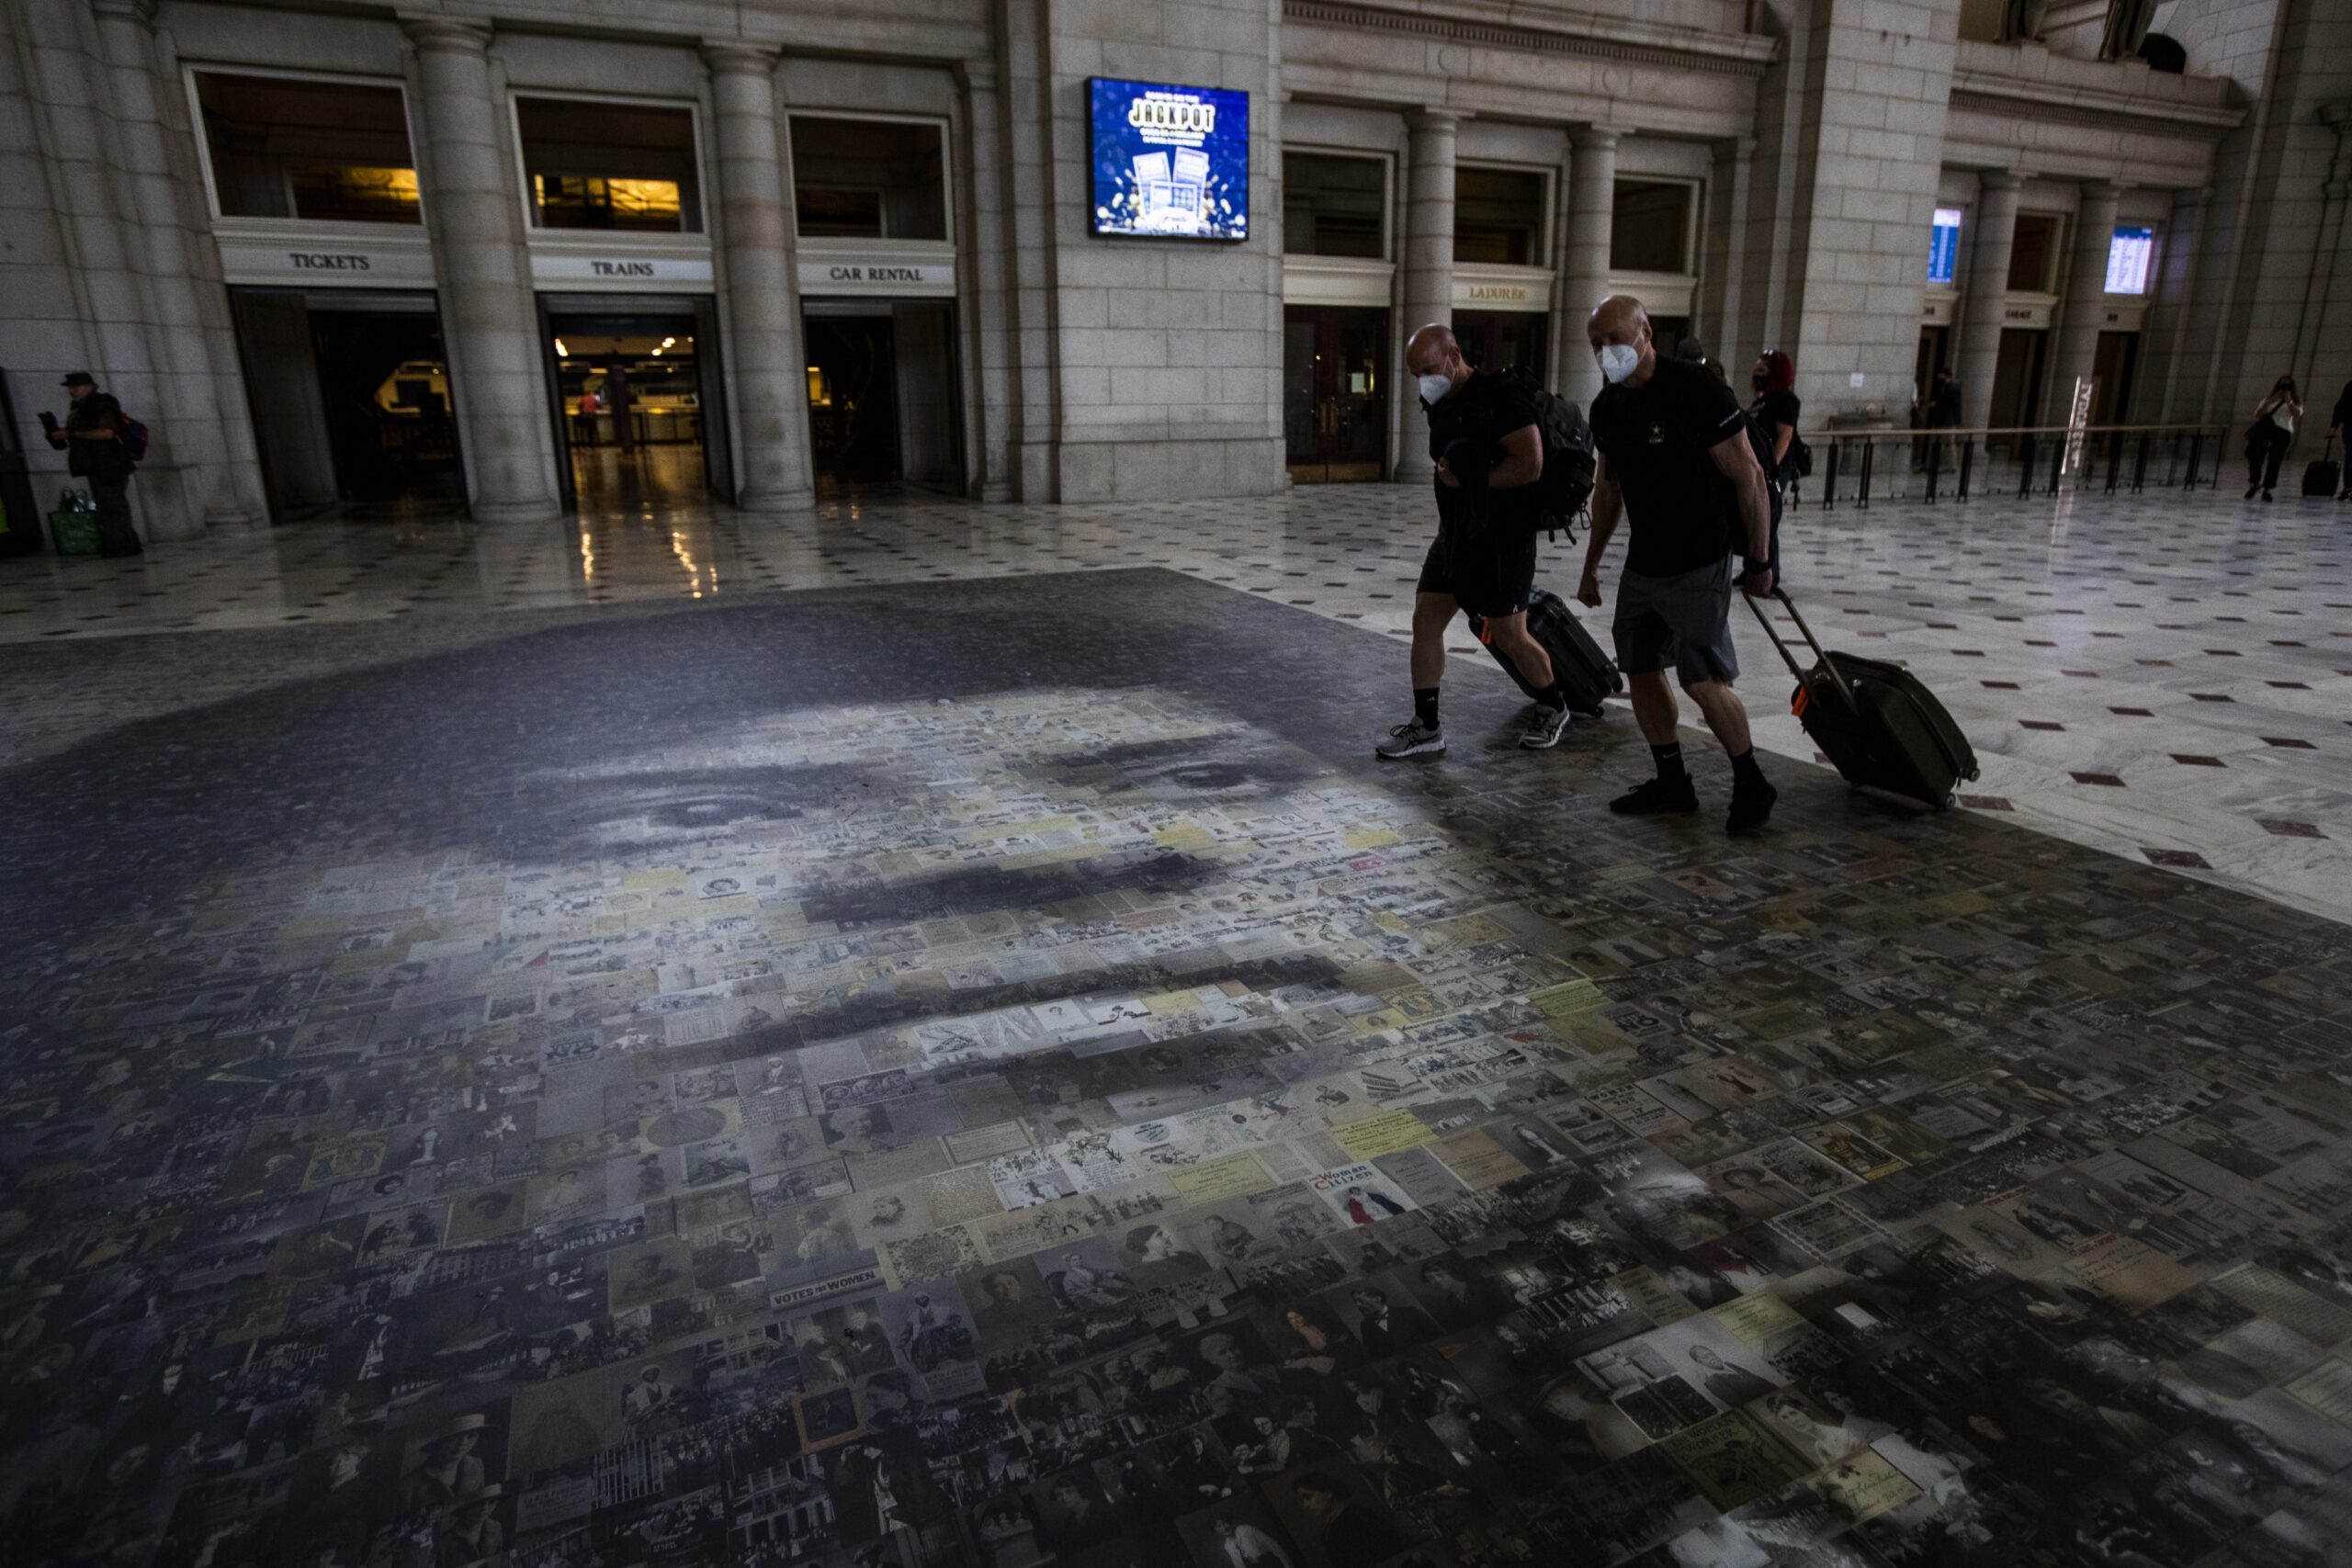 A mosaic of Ida B. Wells on the floor of Washington's Union Station